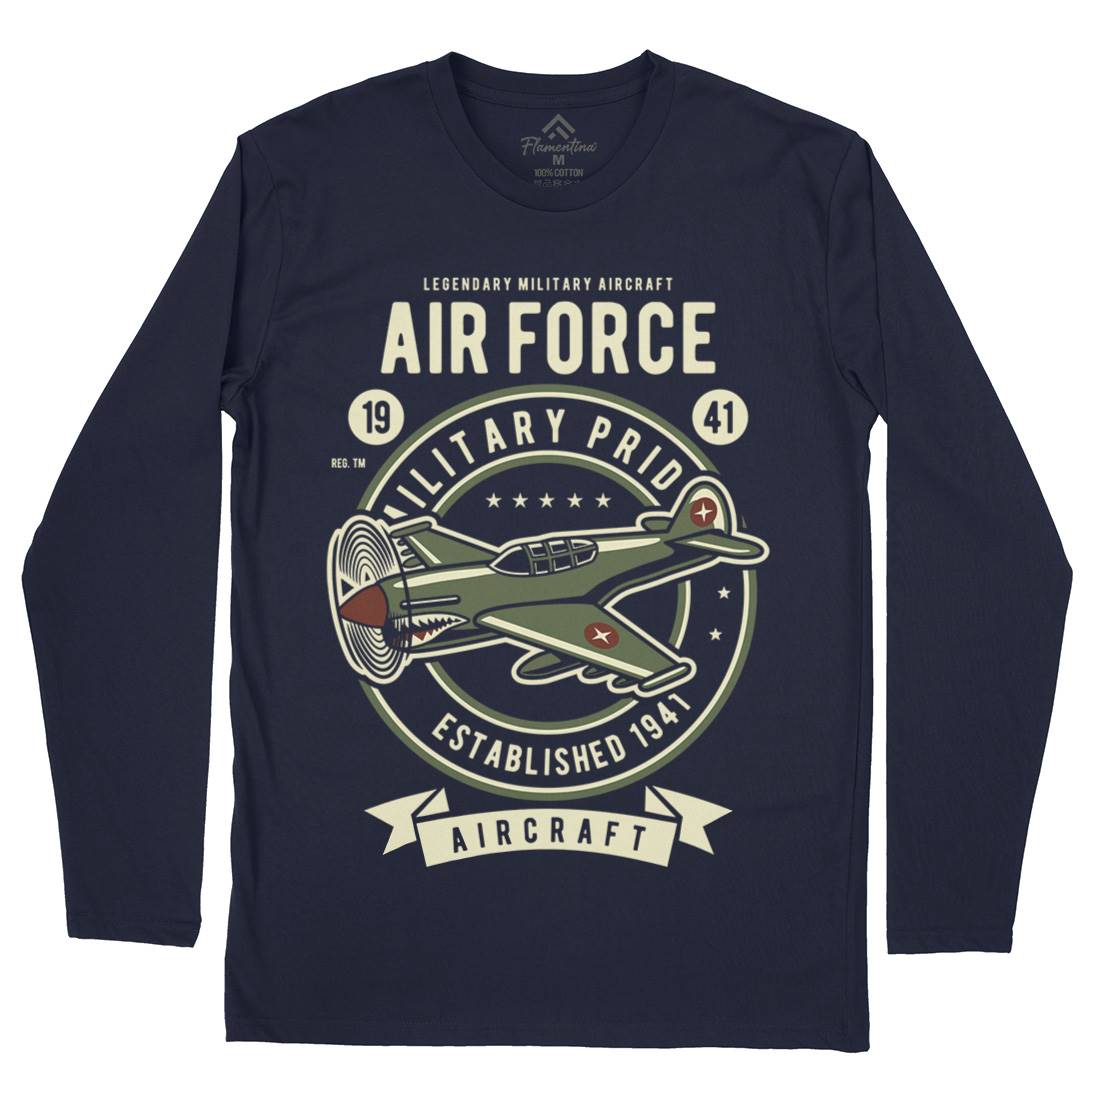 Air Force Mens Long Sleeve T-Shirt Army D502